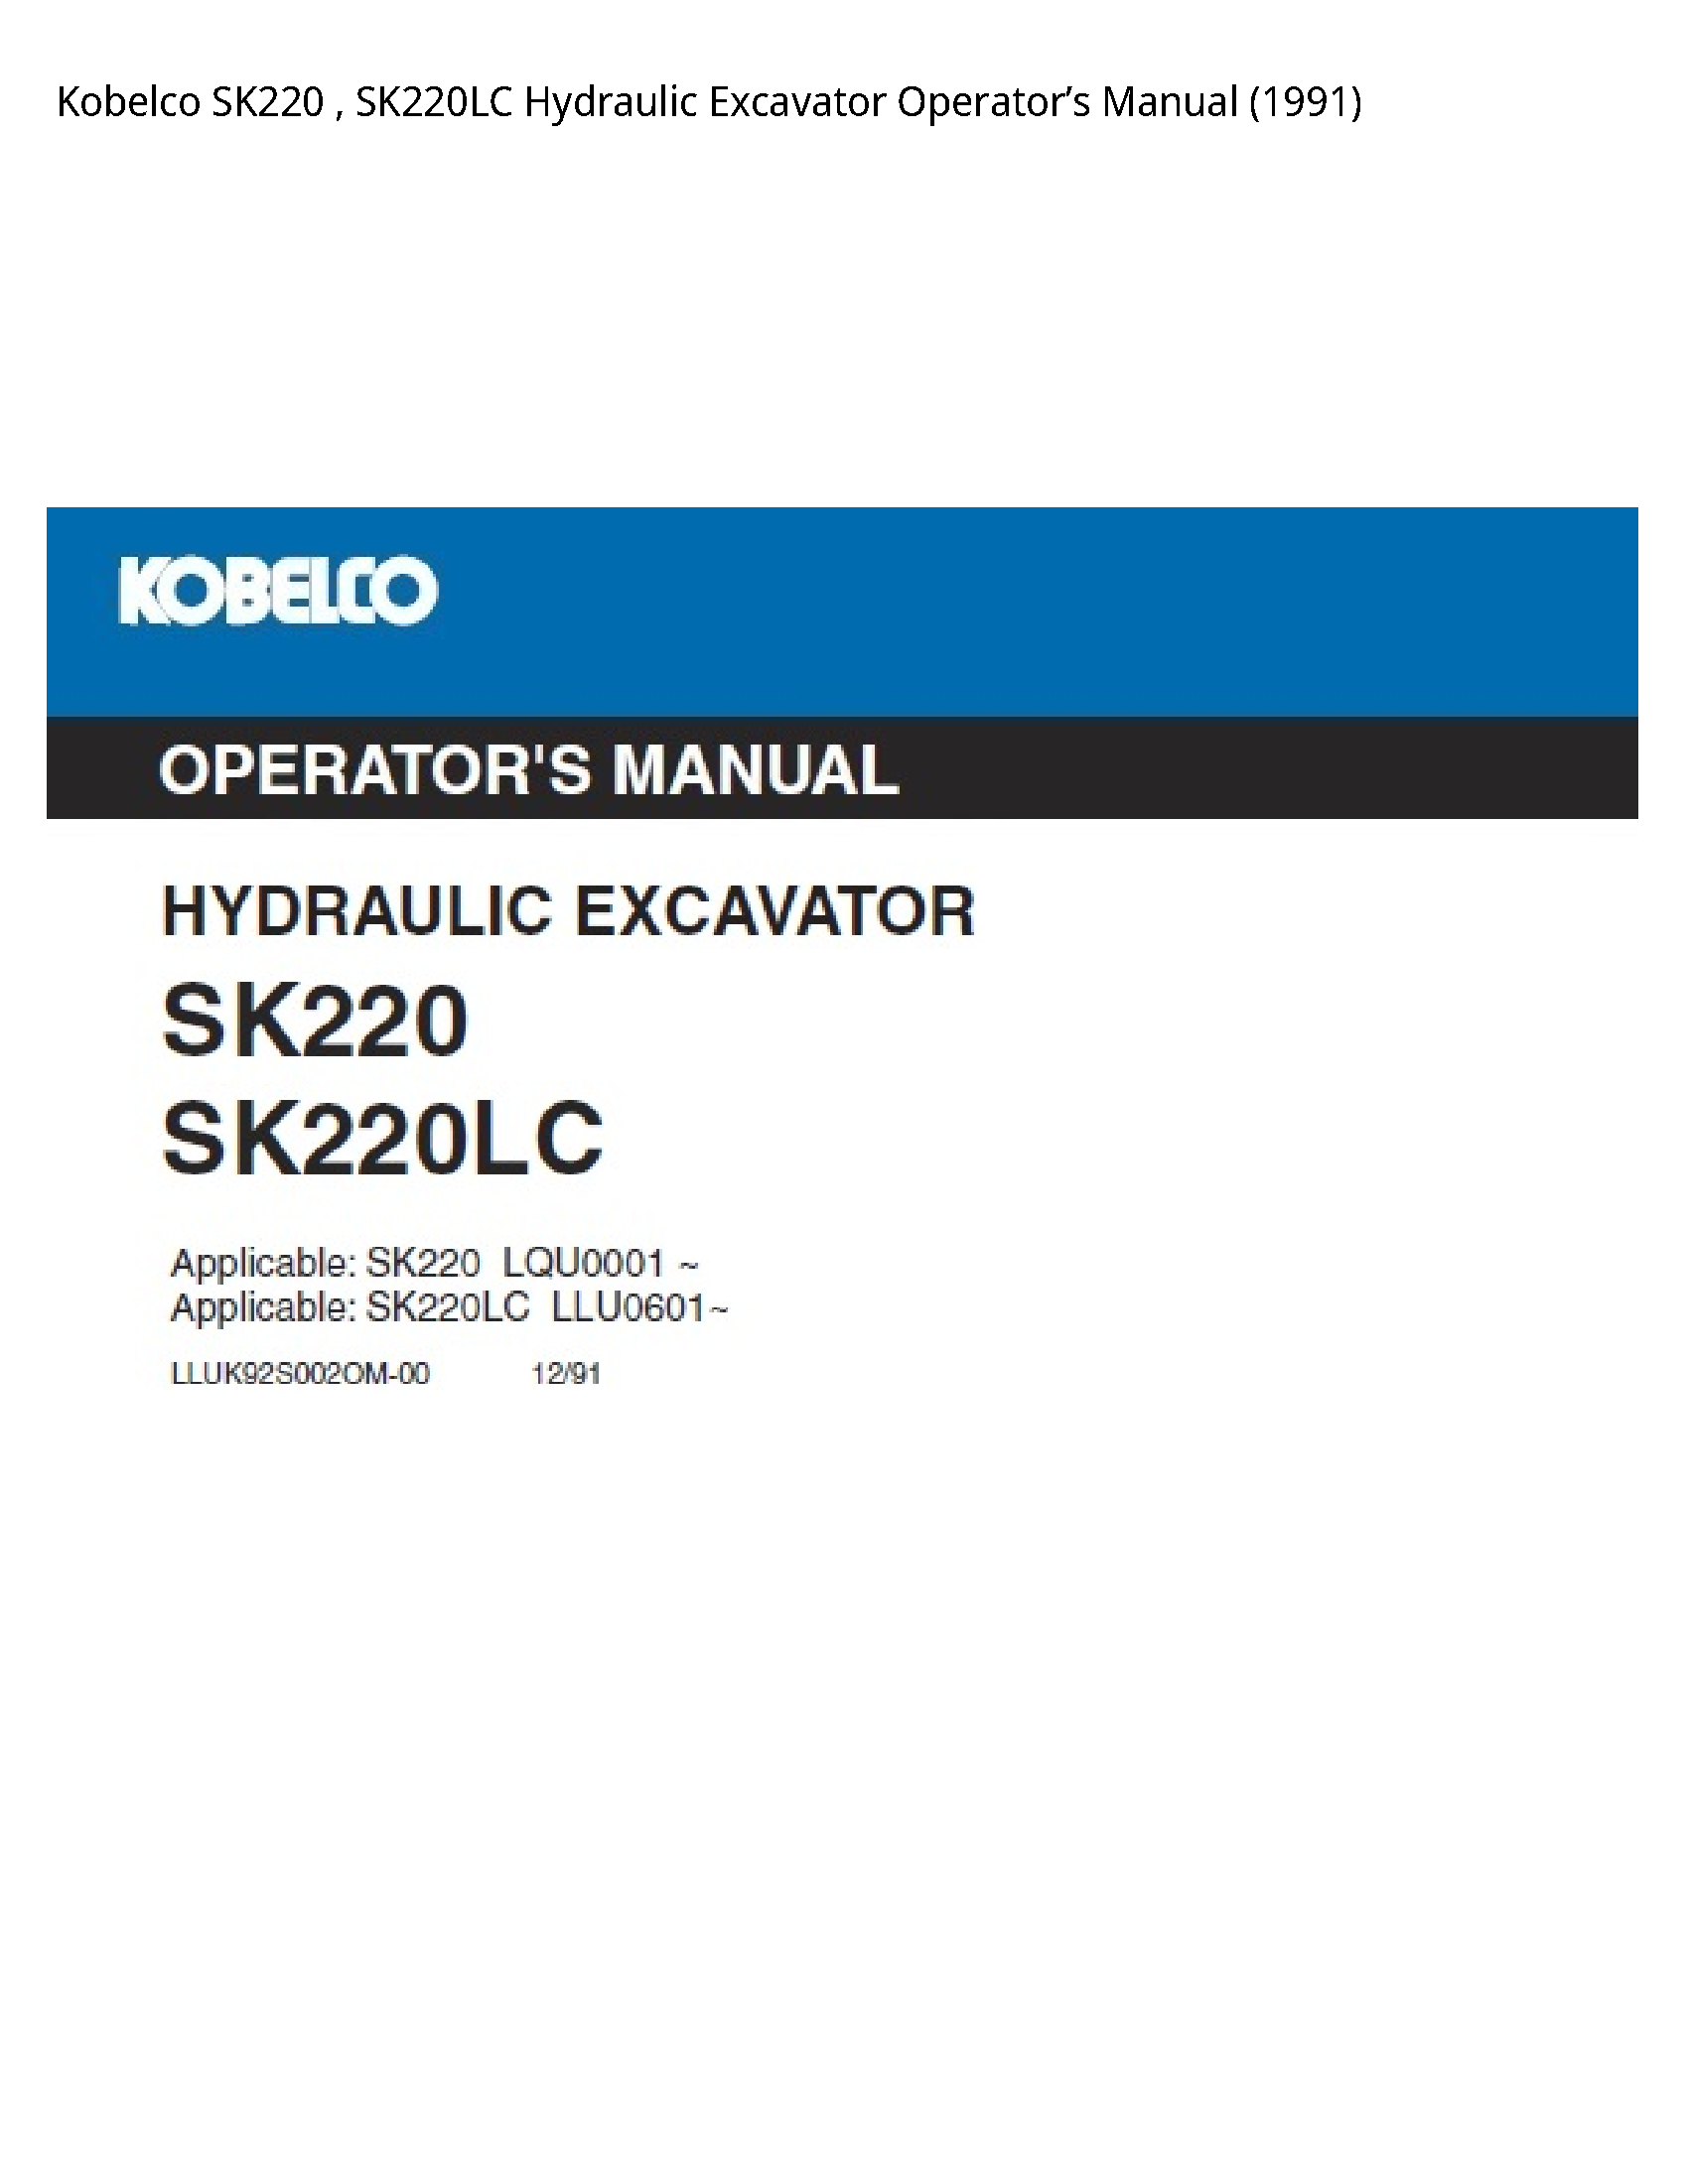 Kobelco SK220 Hydraulic Excavator Operator’s manual